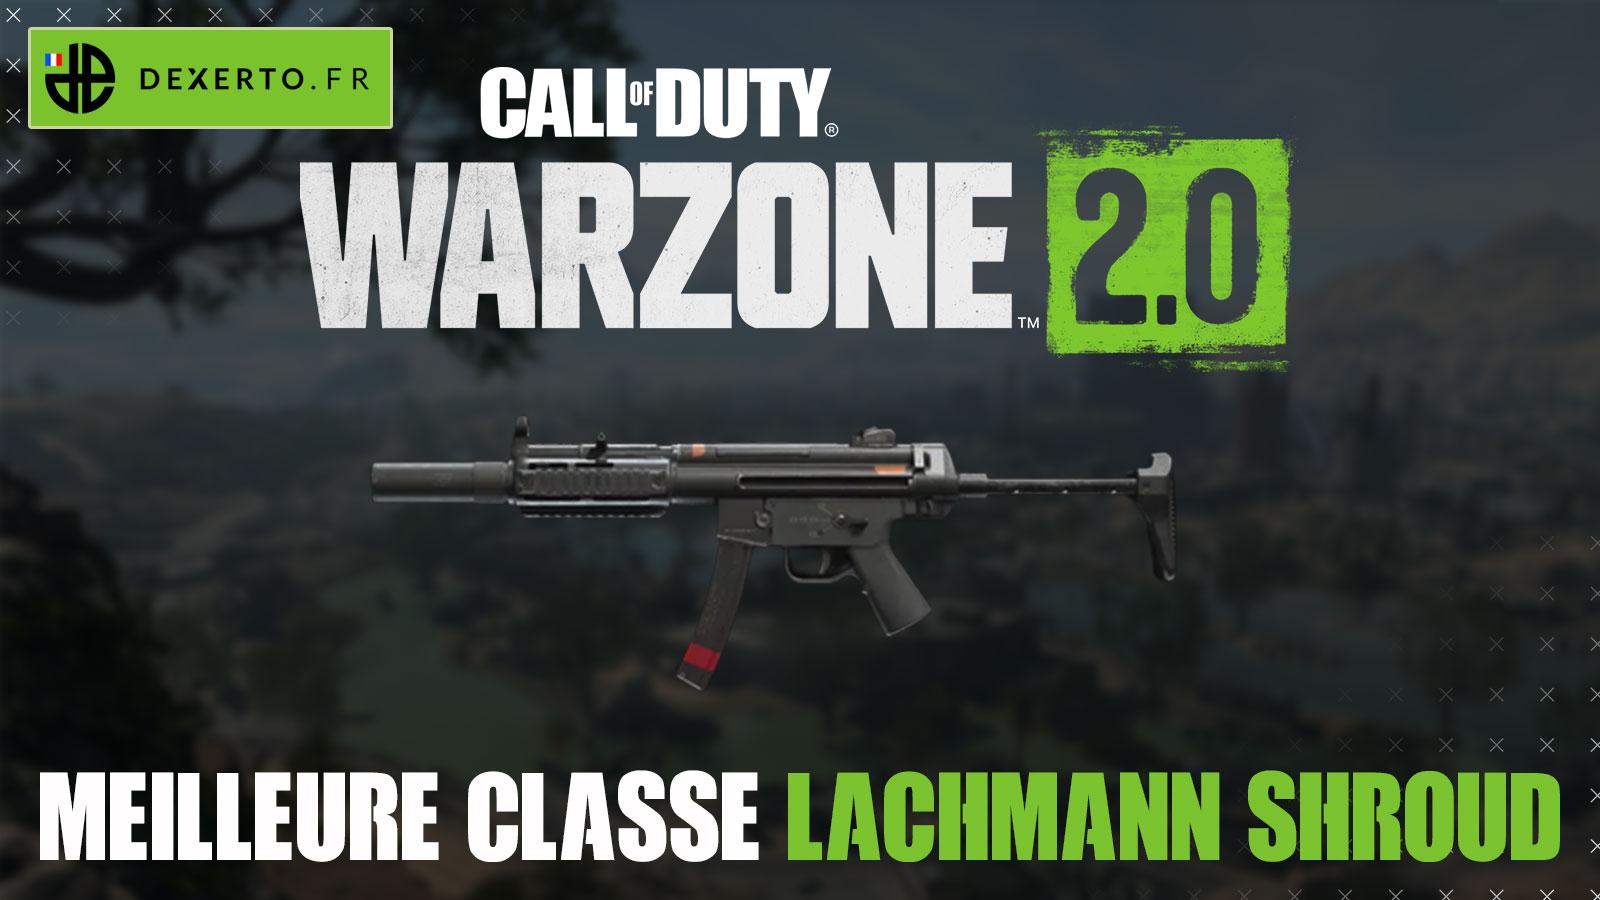 Lachmann Shroud meilleure classe Warzone